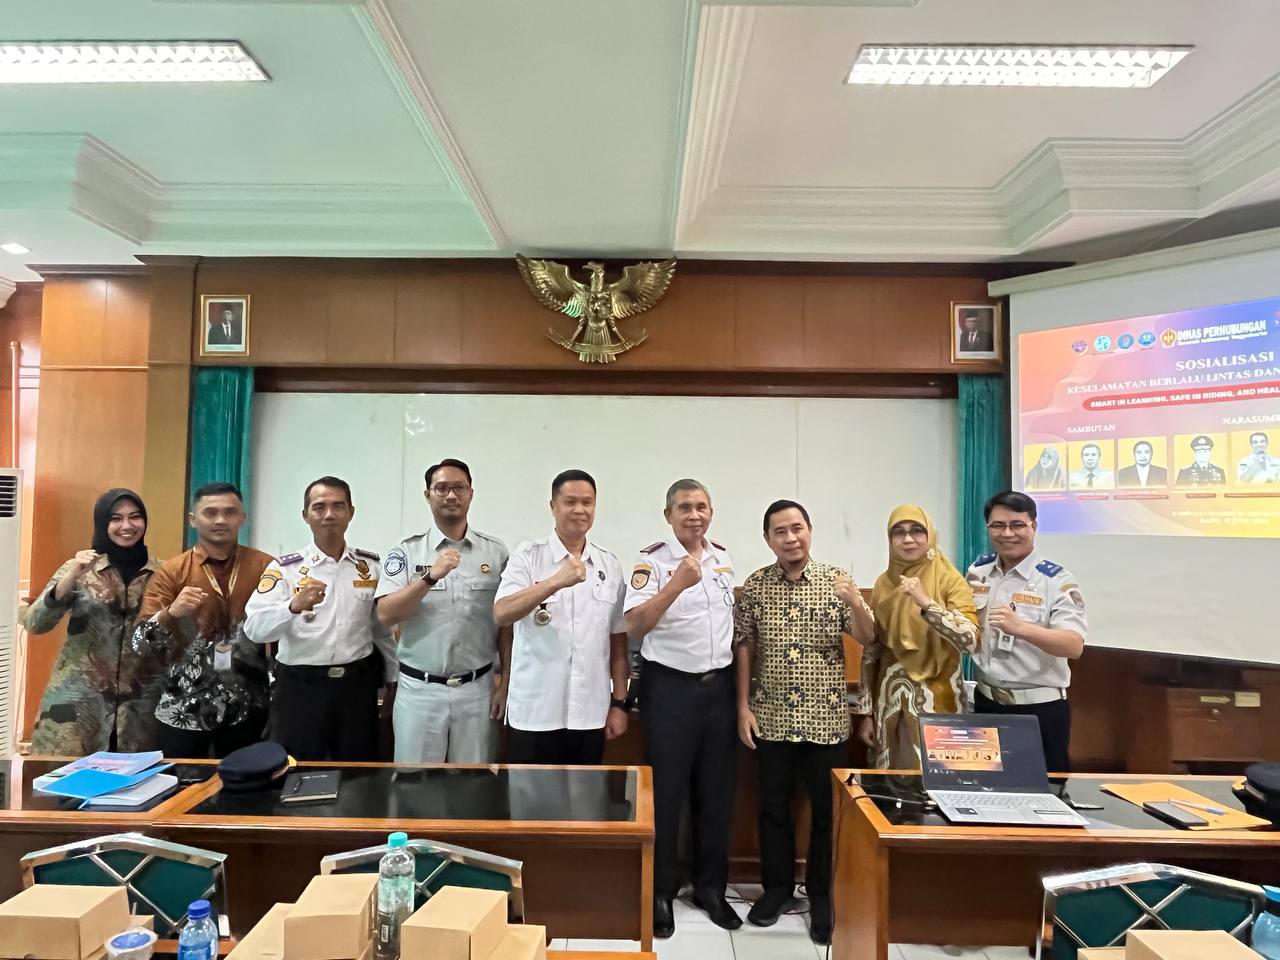 Sosialisasi Kesamsatan Di Kalurahan Wirogunan Yogyakarta